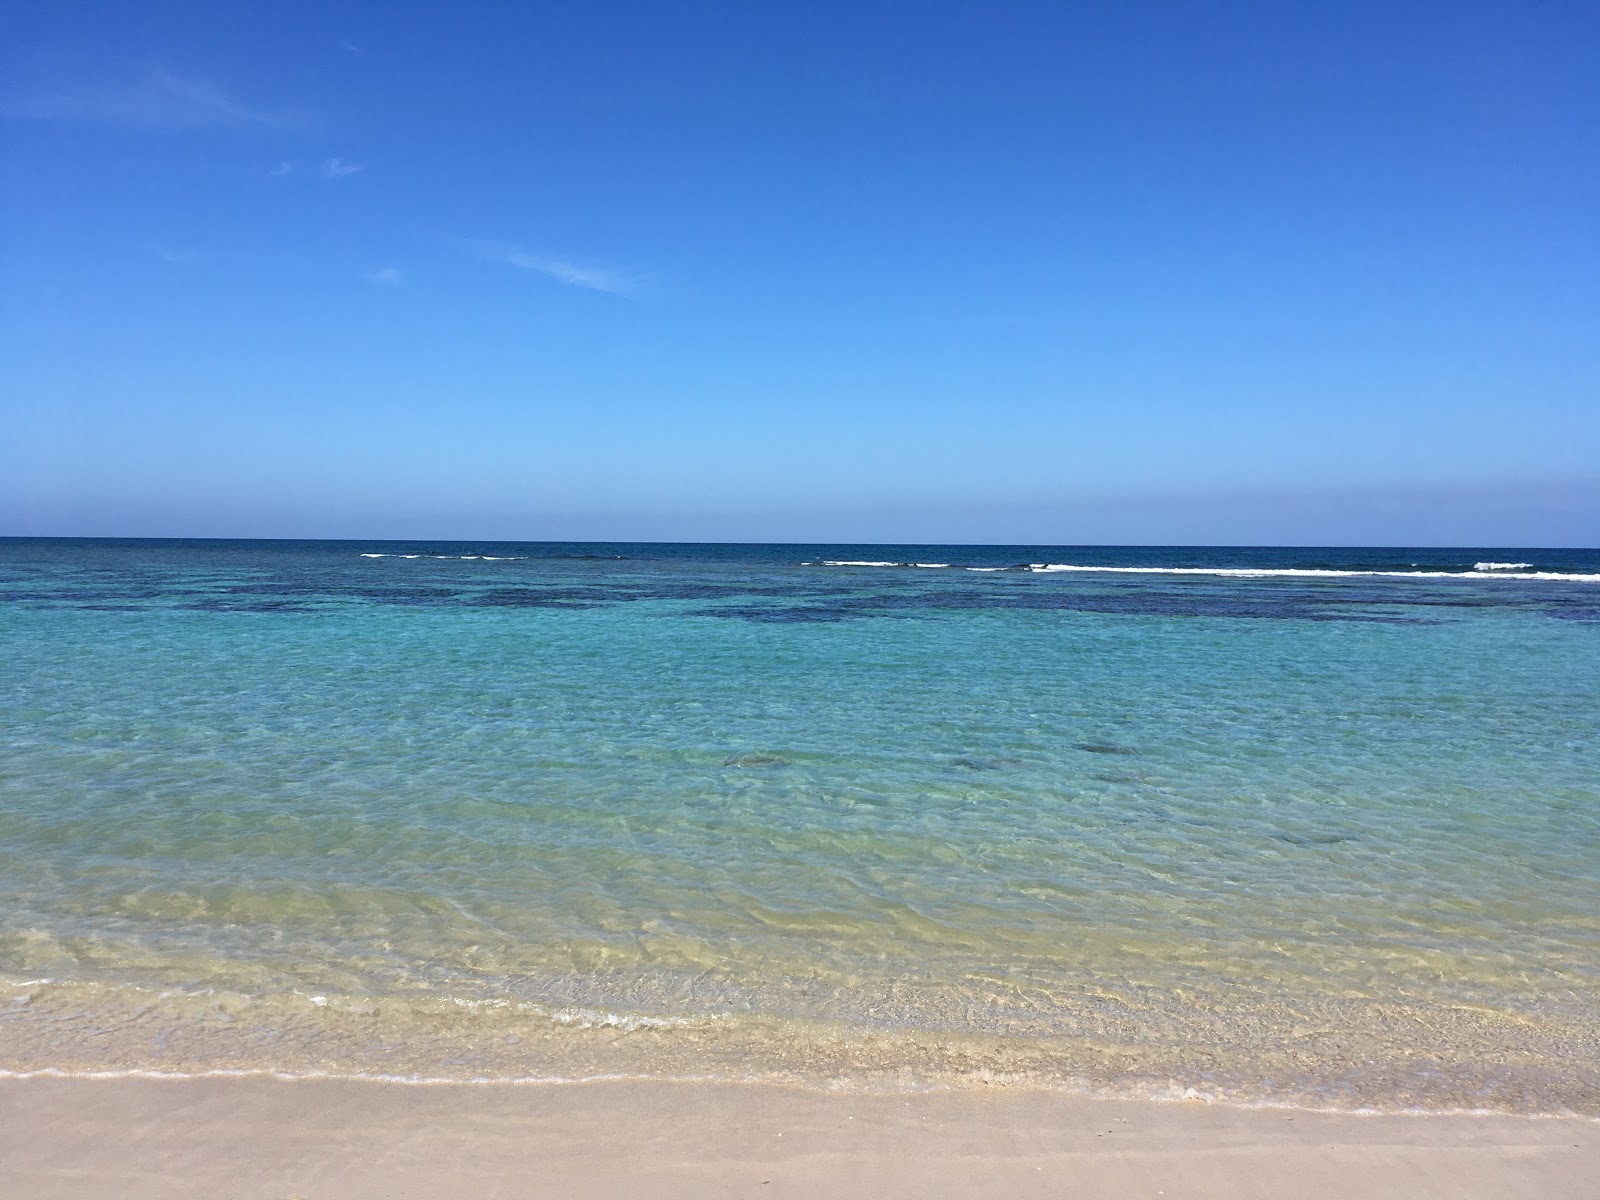 Playa Jibacoa III'in fotoğrafı geniş plaj ile birlikte